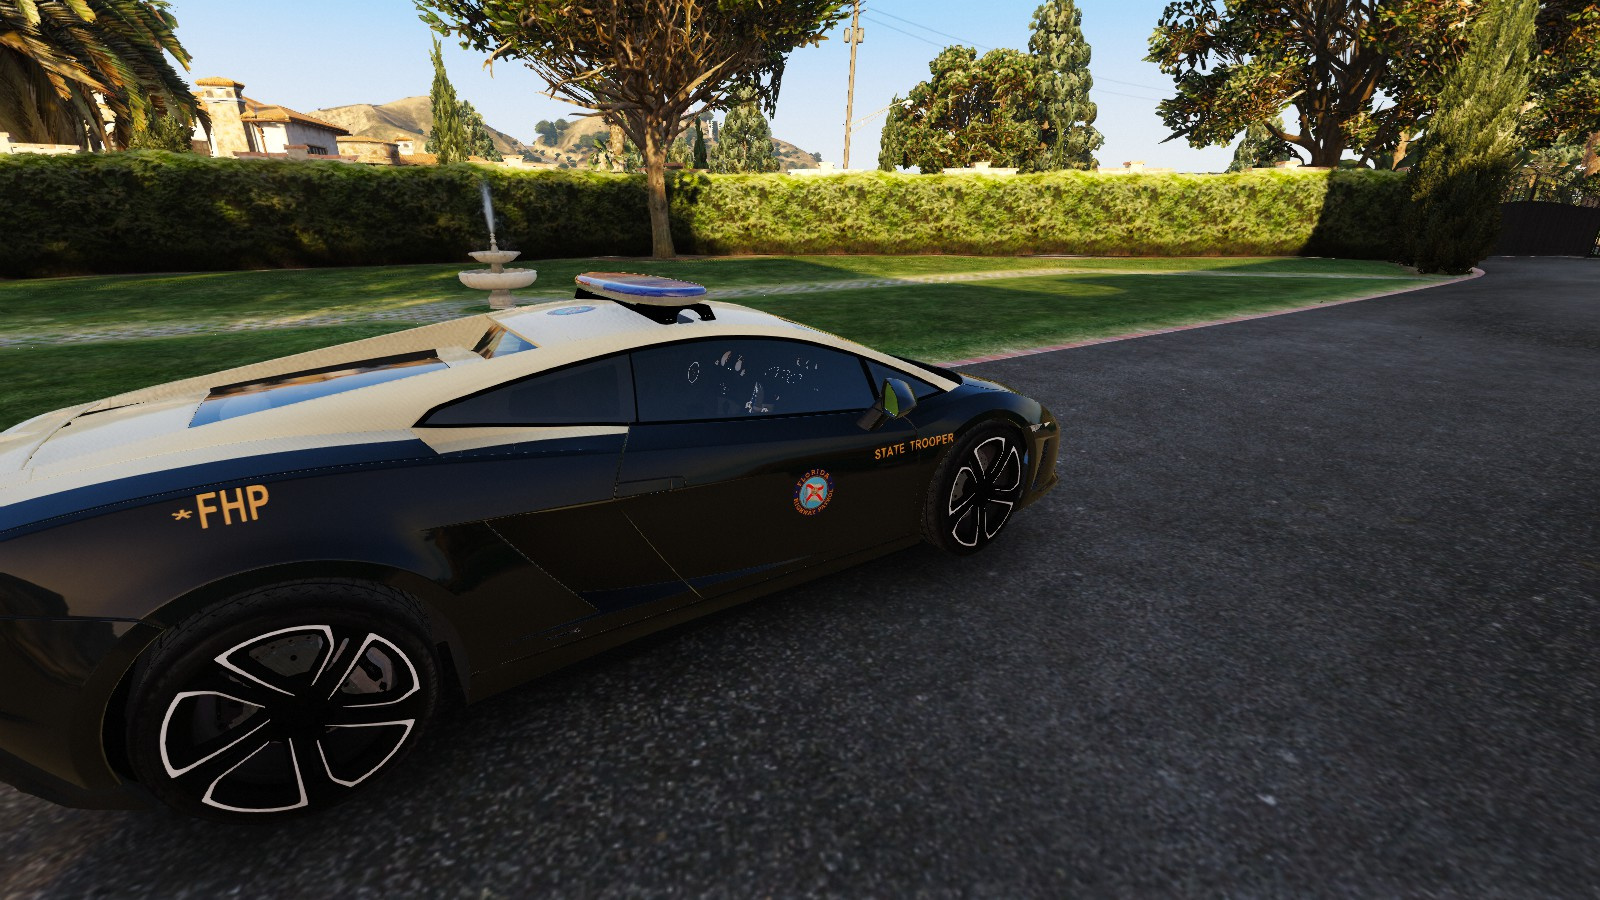 2013 FHP Lamborghini  Gallardo Skin GTA5 Mods com